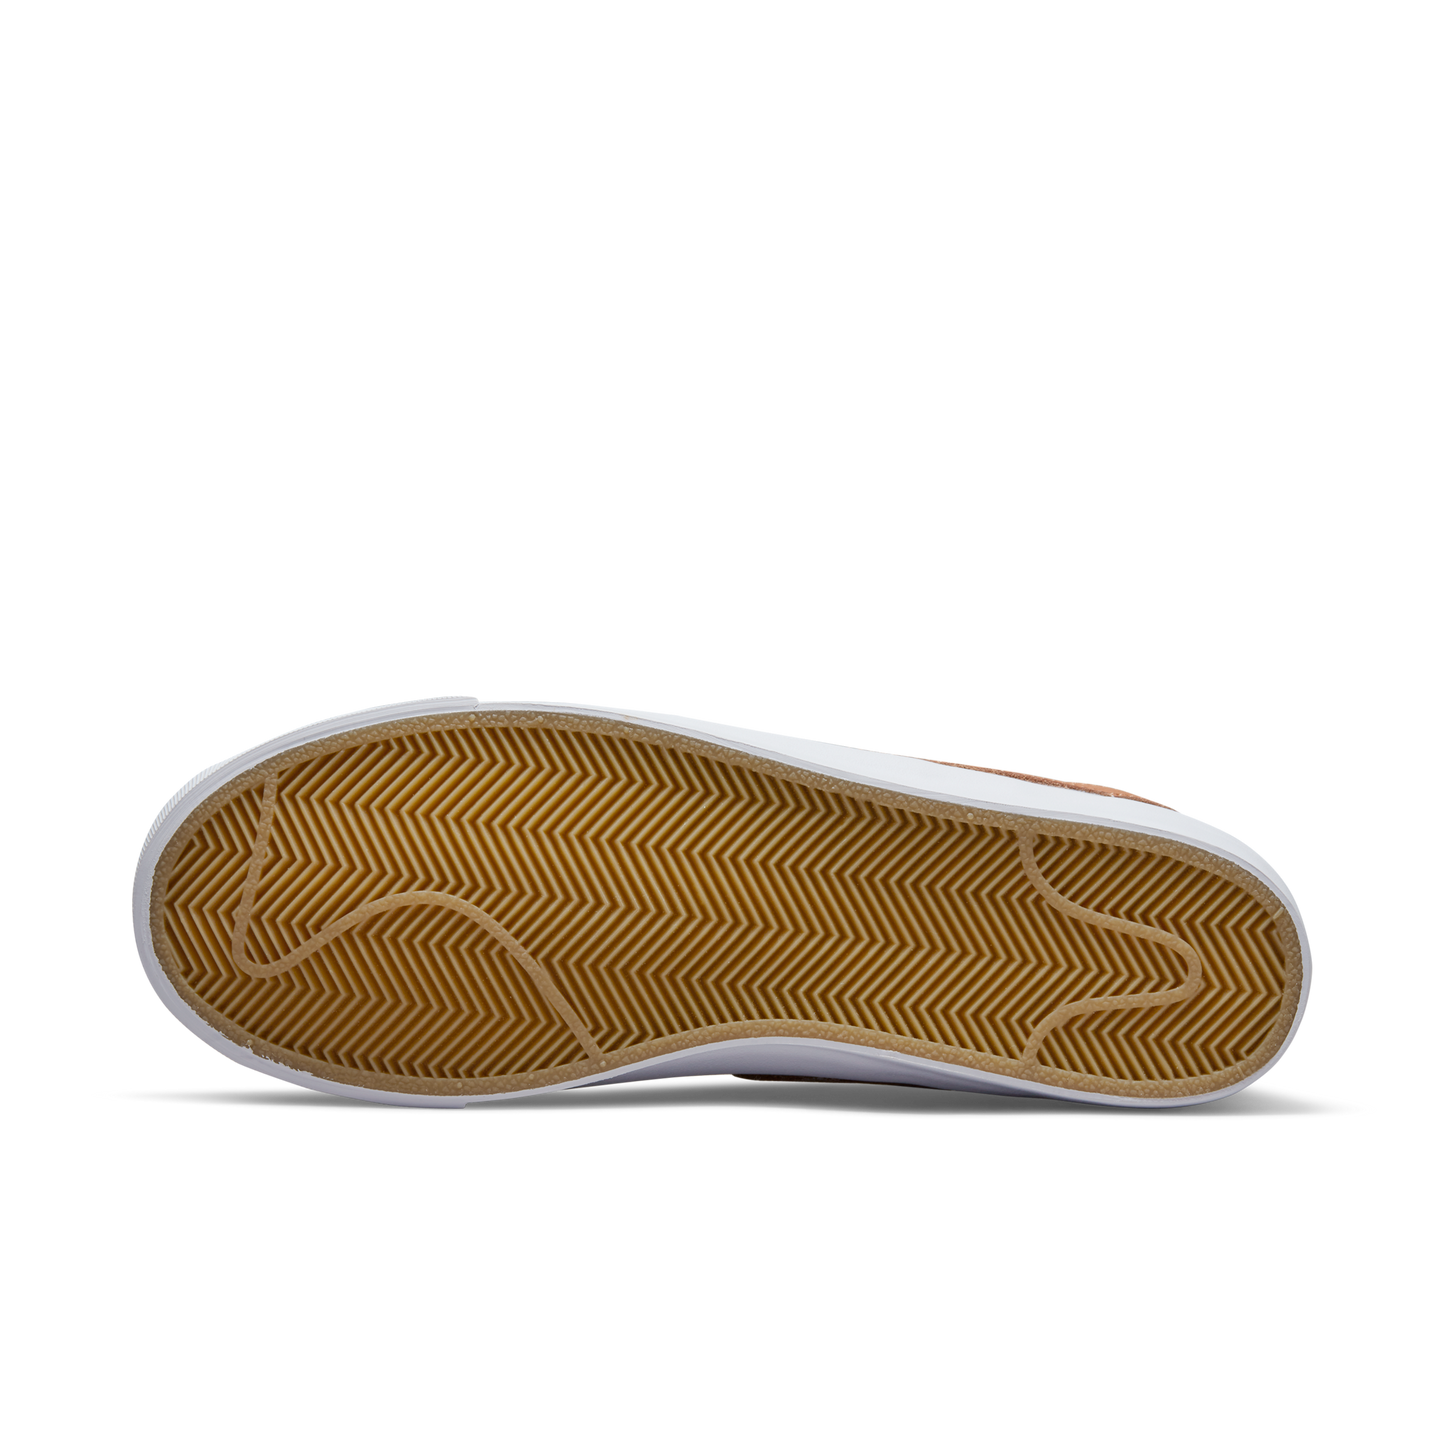 Nike SB Blazer Low Pro GT Orange Label white light cognac